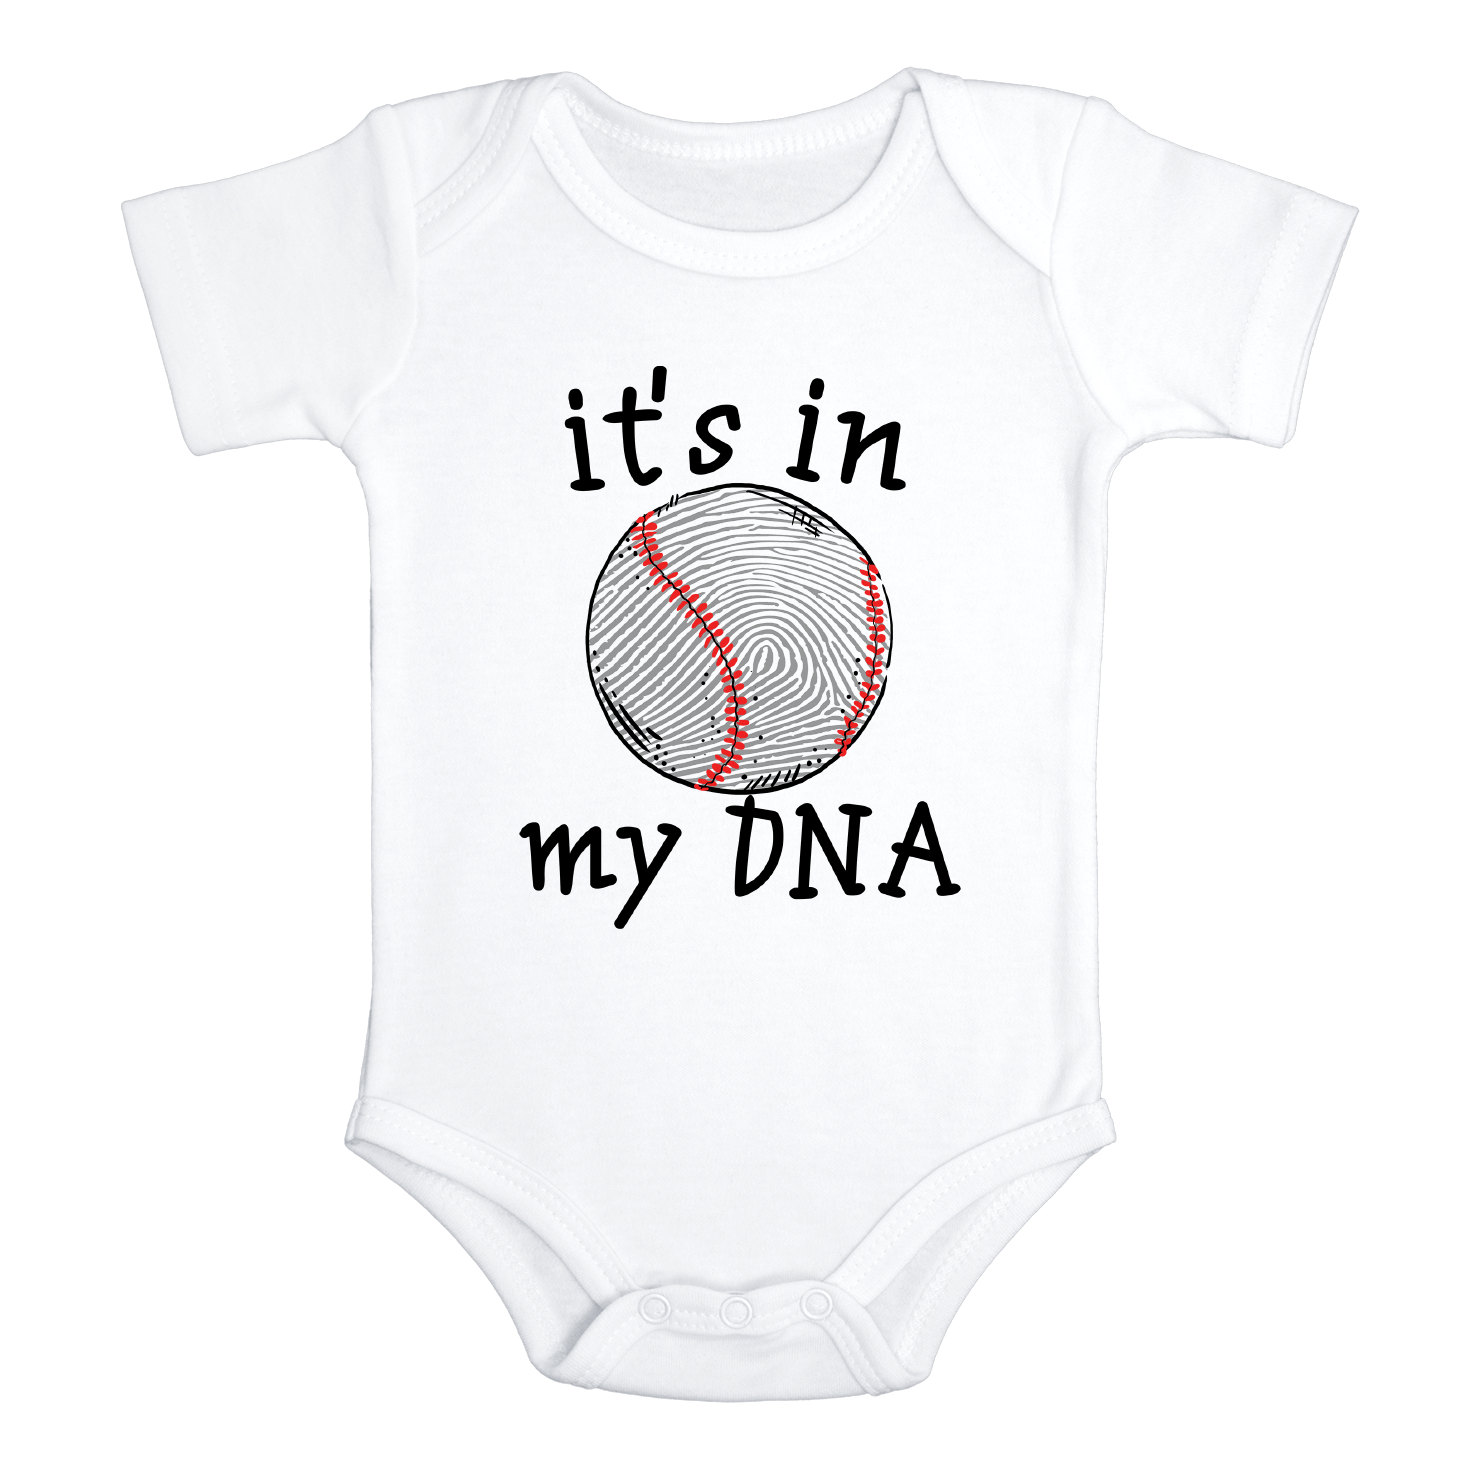 IT'S IN MY DNA BASEBALL Funny baby sports fan onesies math bodysuit (white: short or long sleeve)